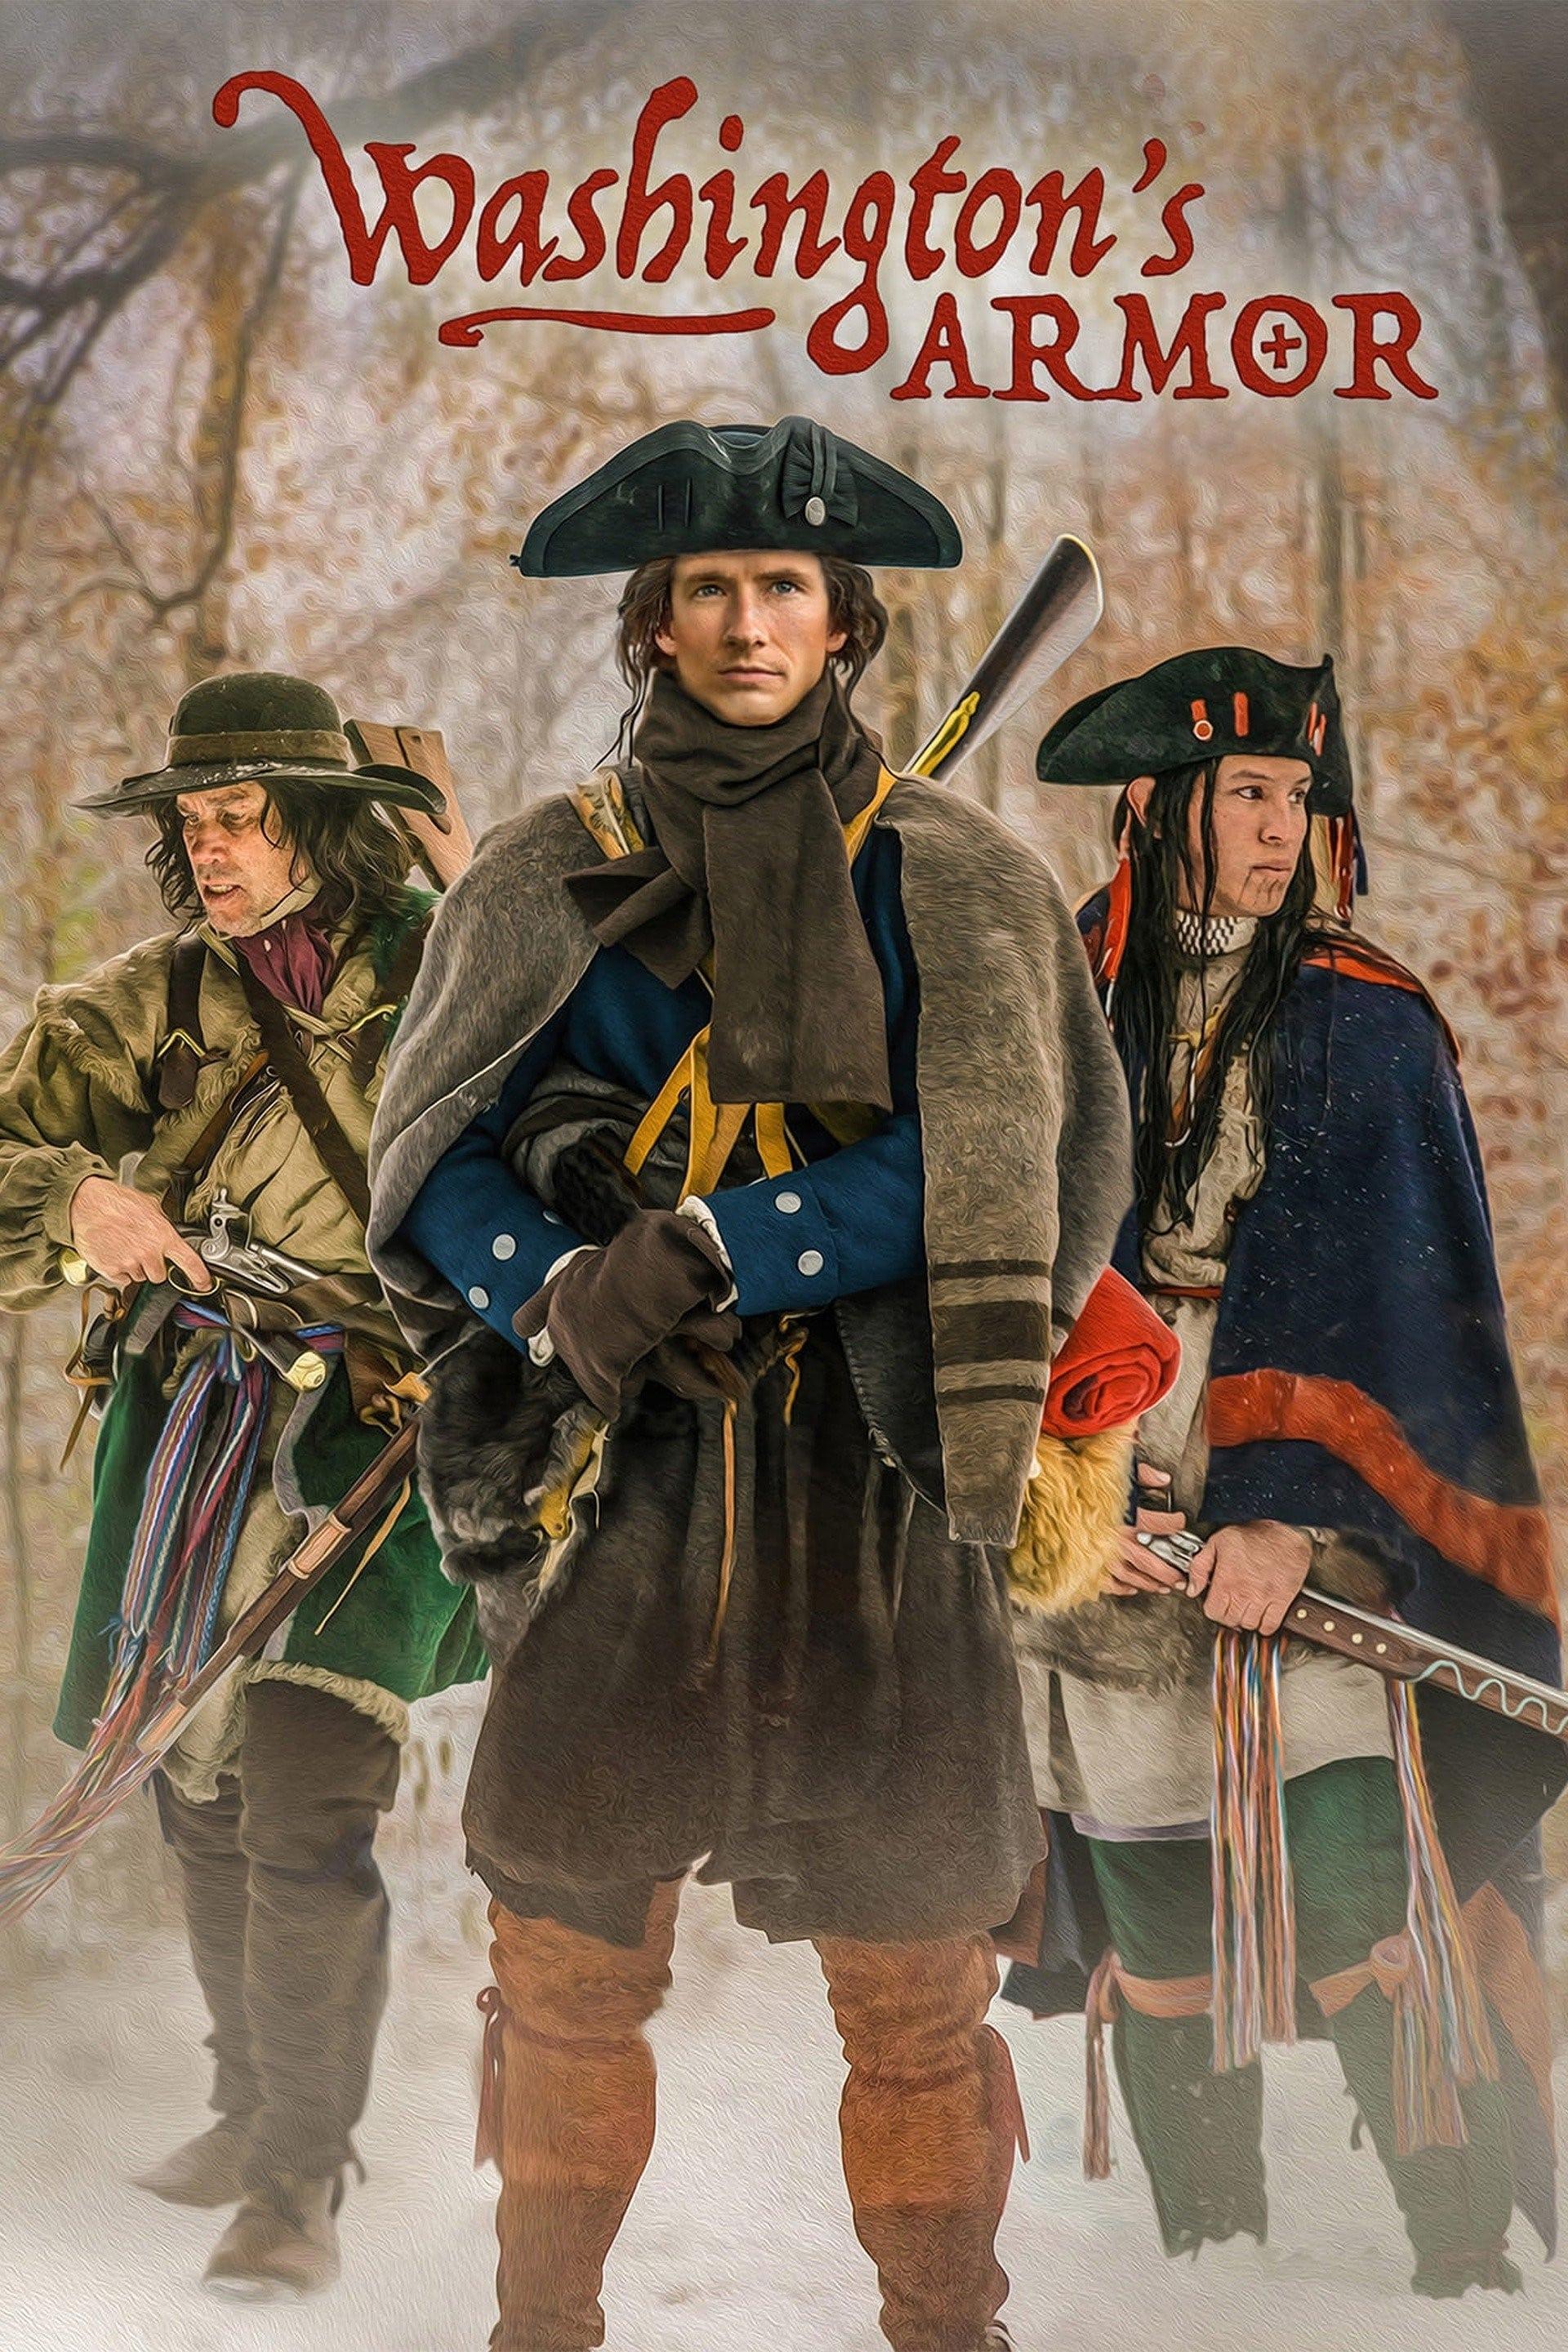 Washington's Armor: The Journey poster